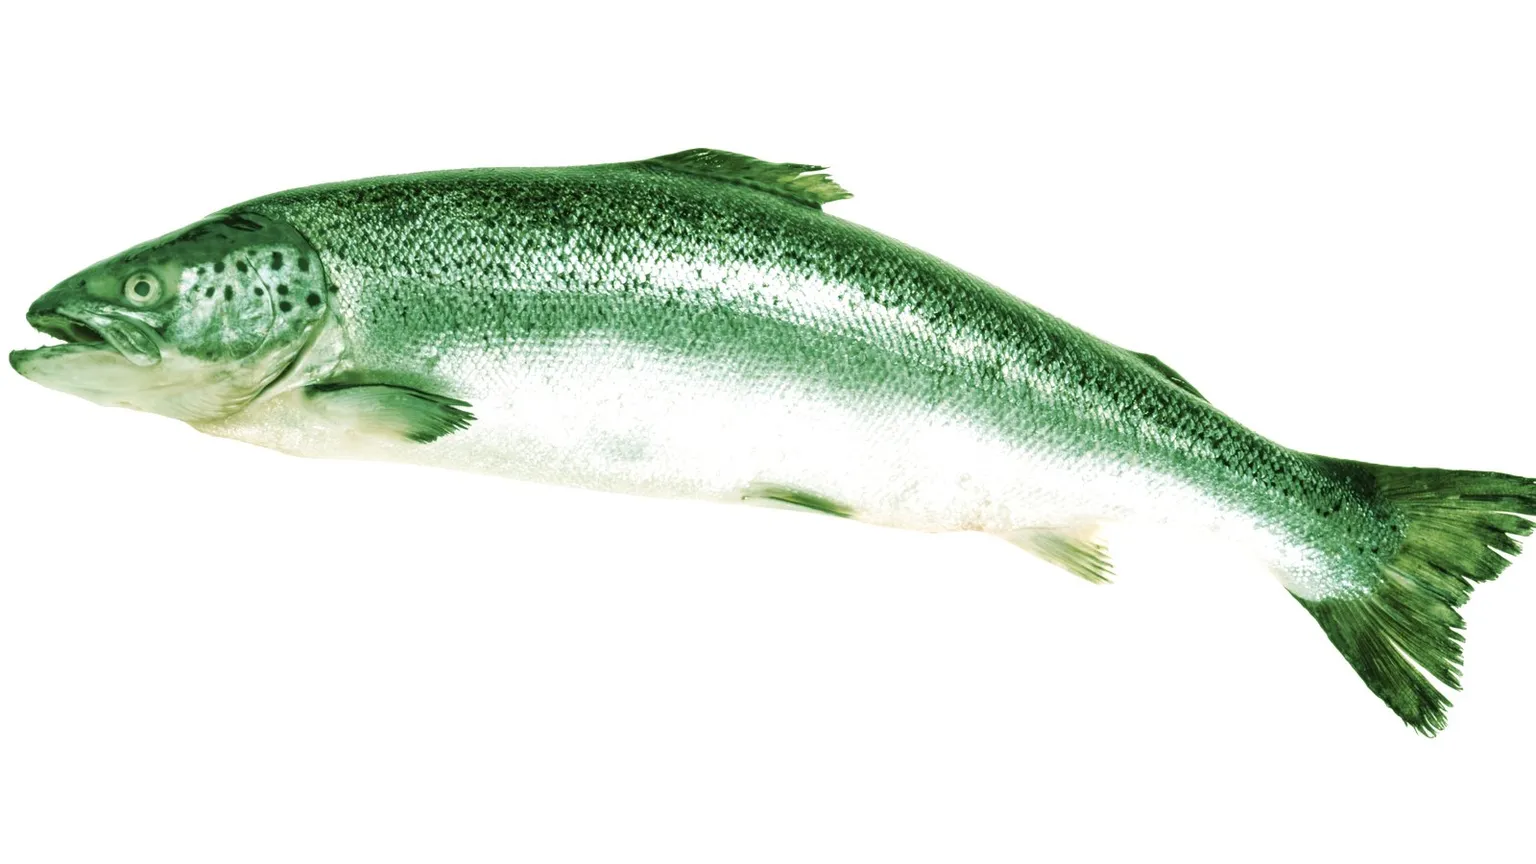 A salmon. Image: Shutterstock